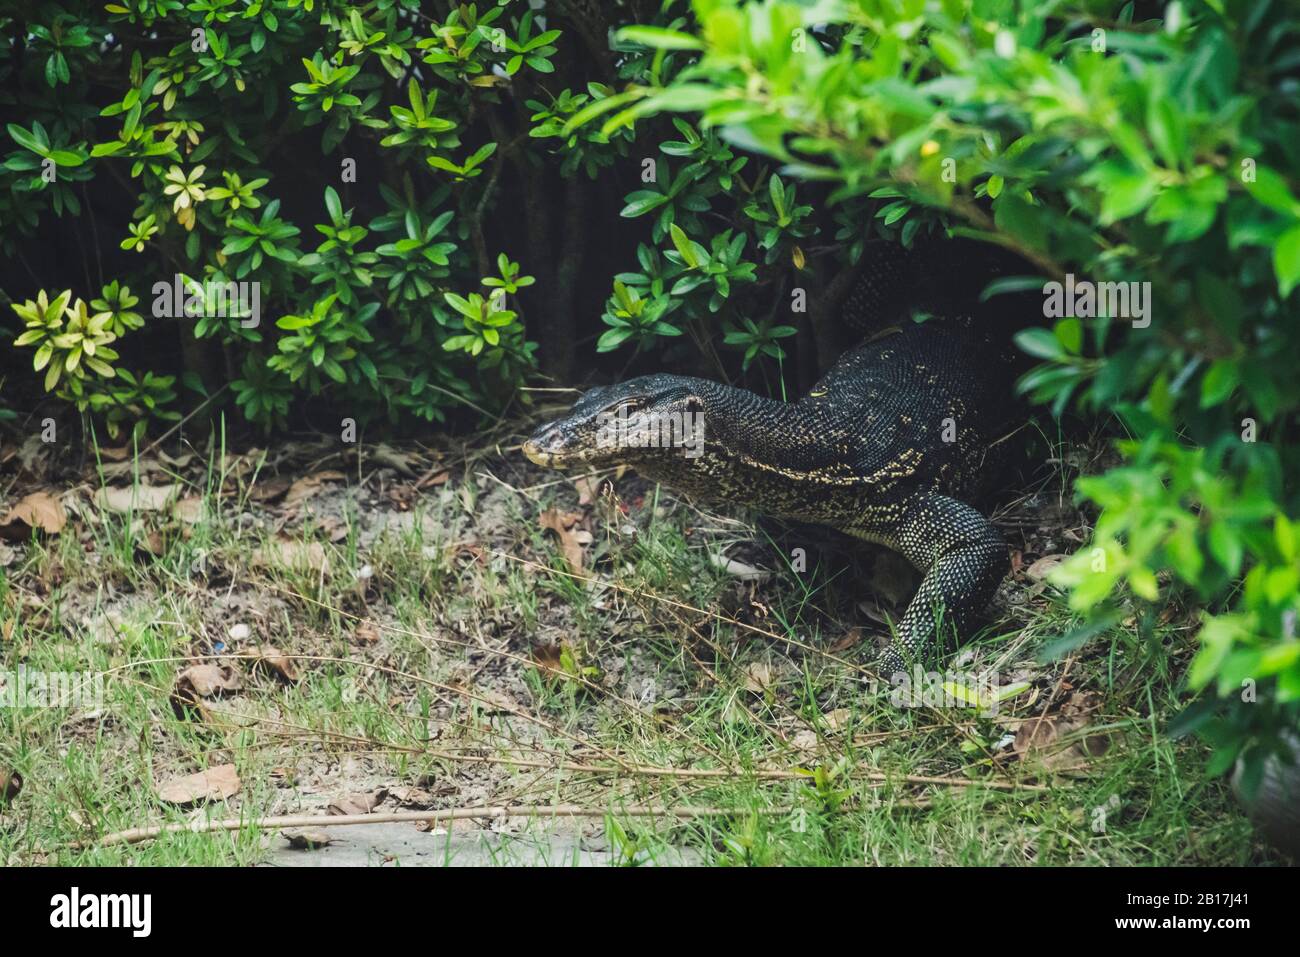 Monitor lizard in undergrowth, Koh Lanta, Thailand Stock Photo